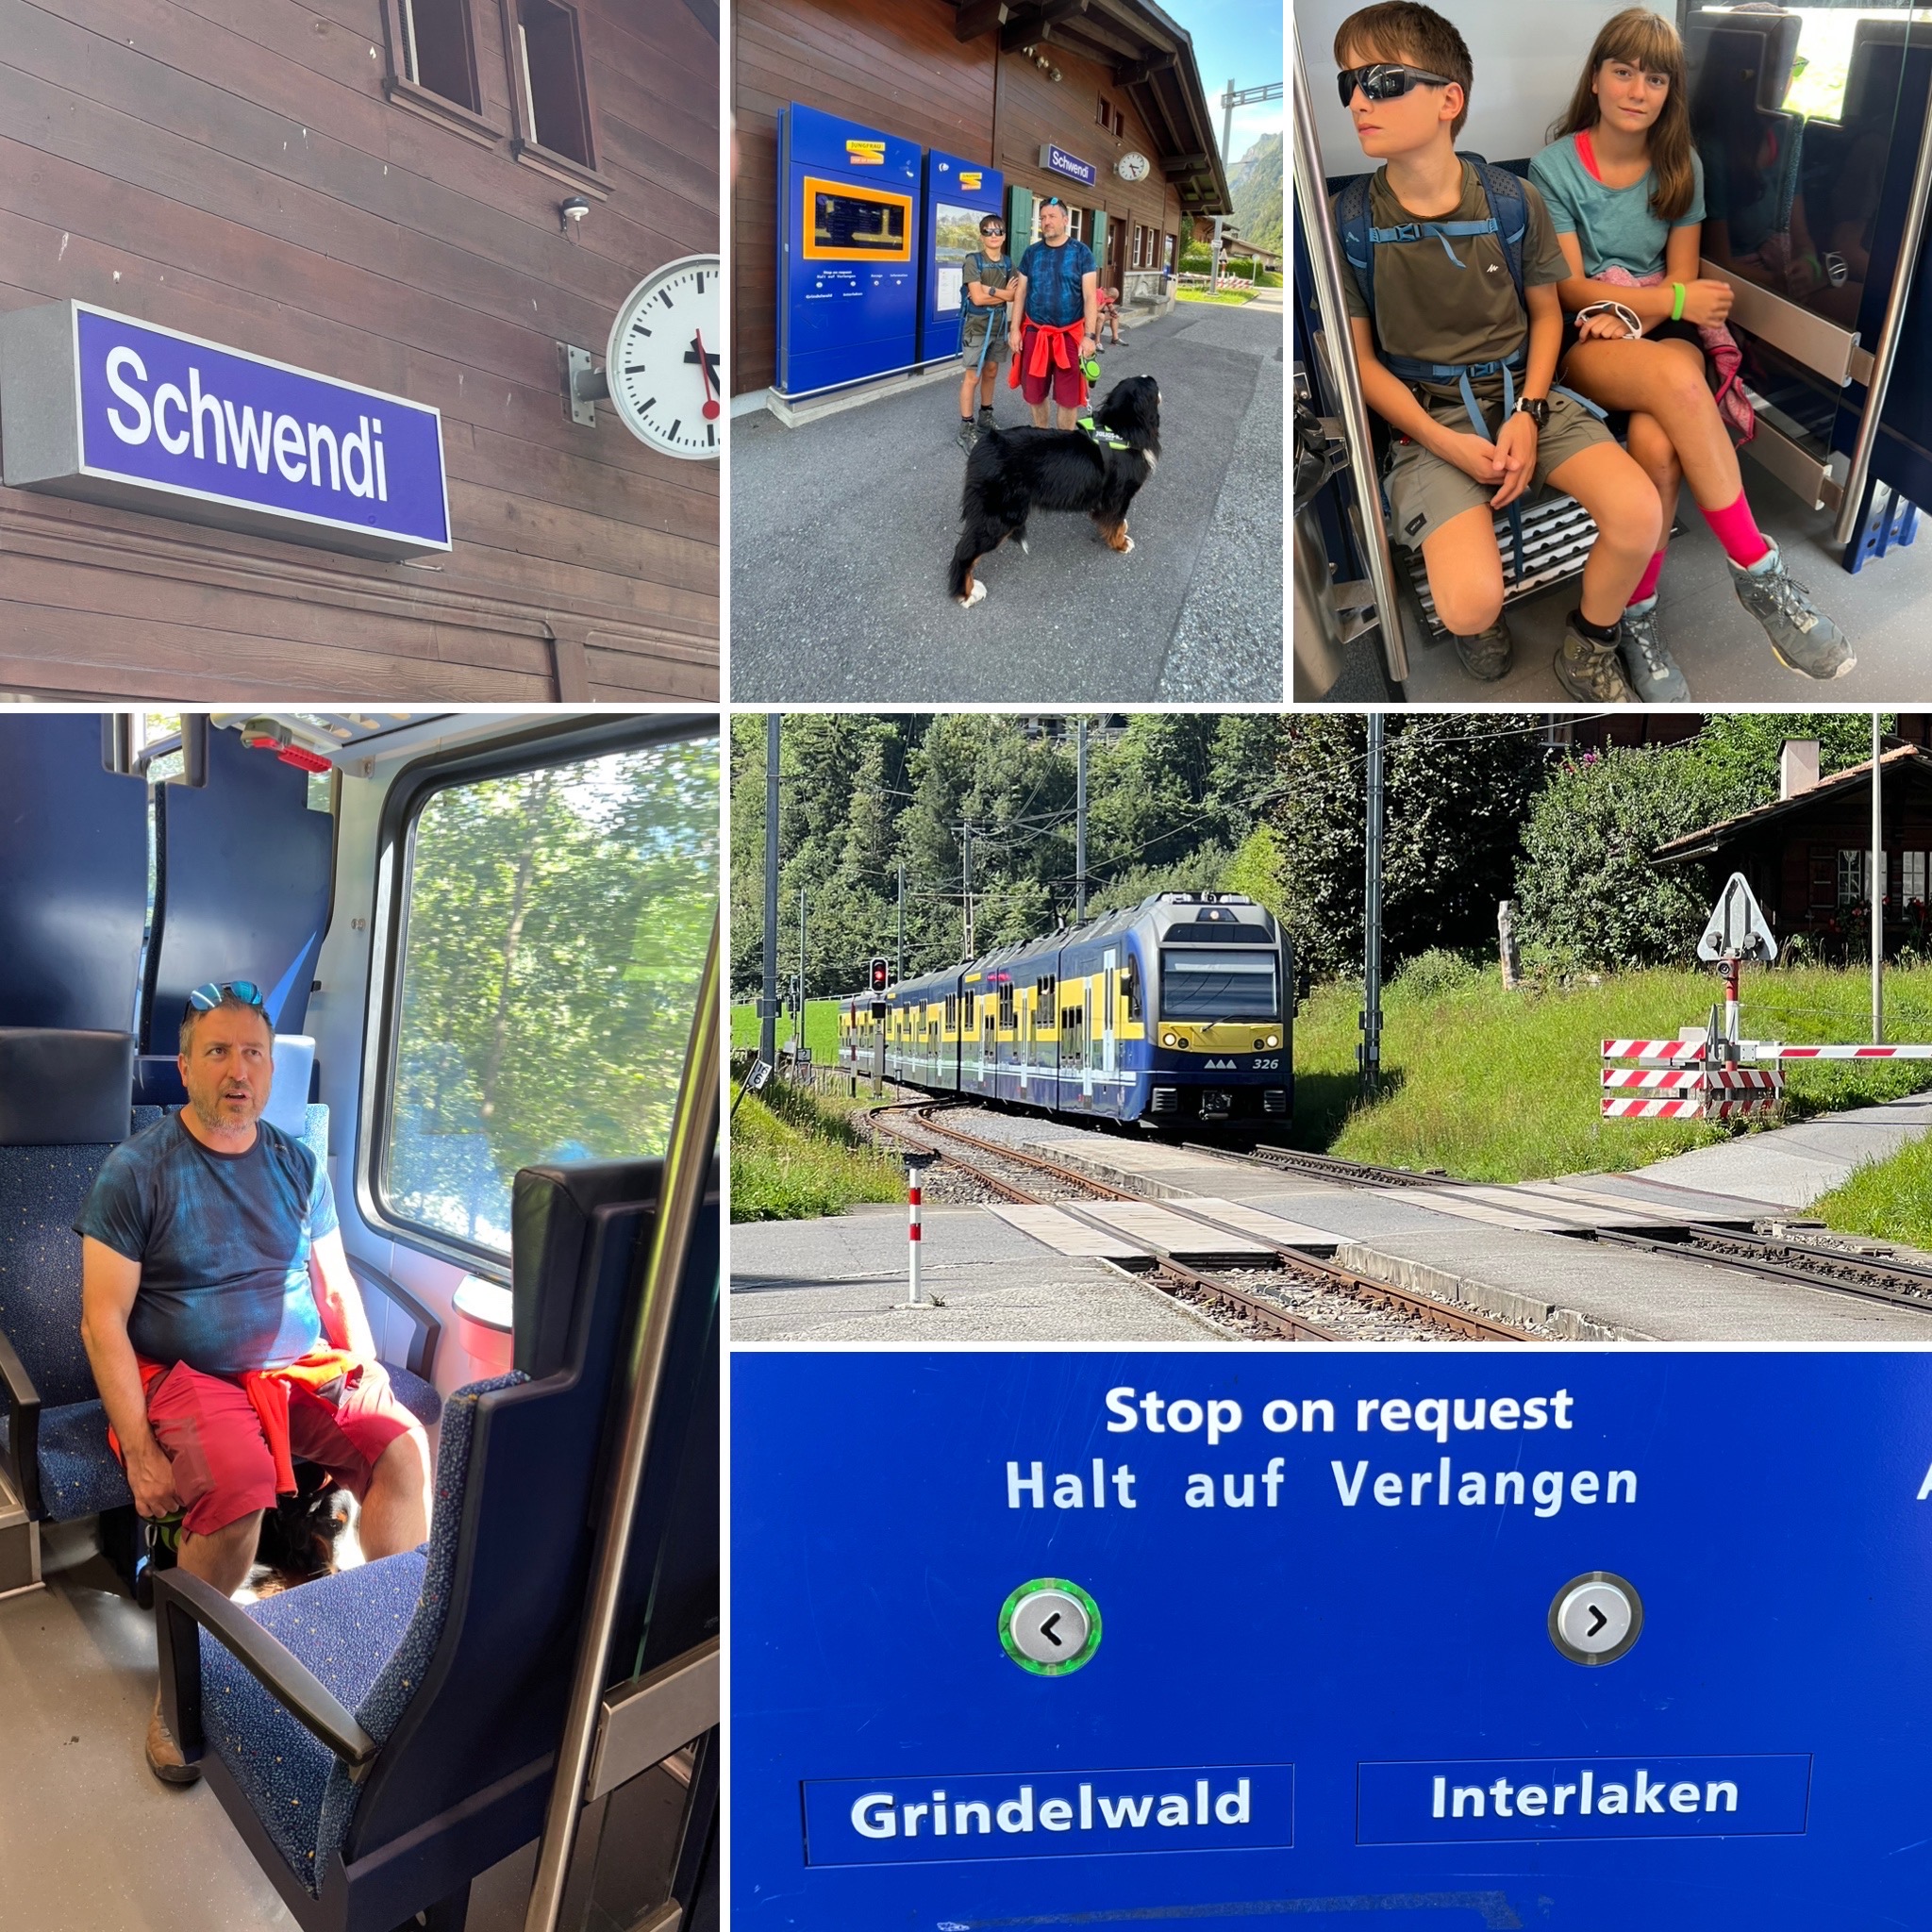 Autoenfamilia - Parada de tren Schwendi direcció Grindelwald